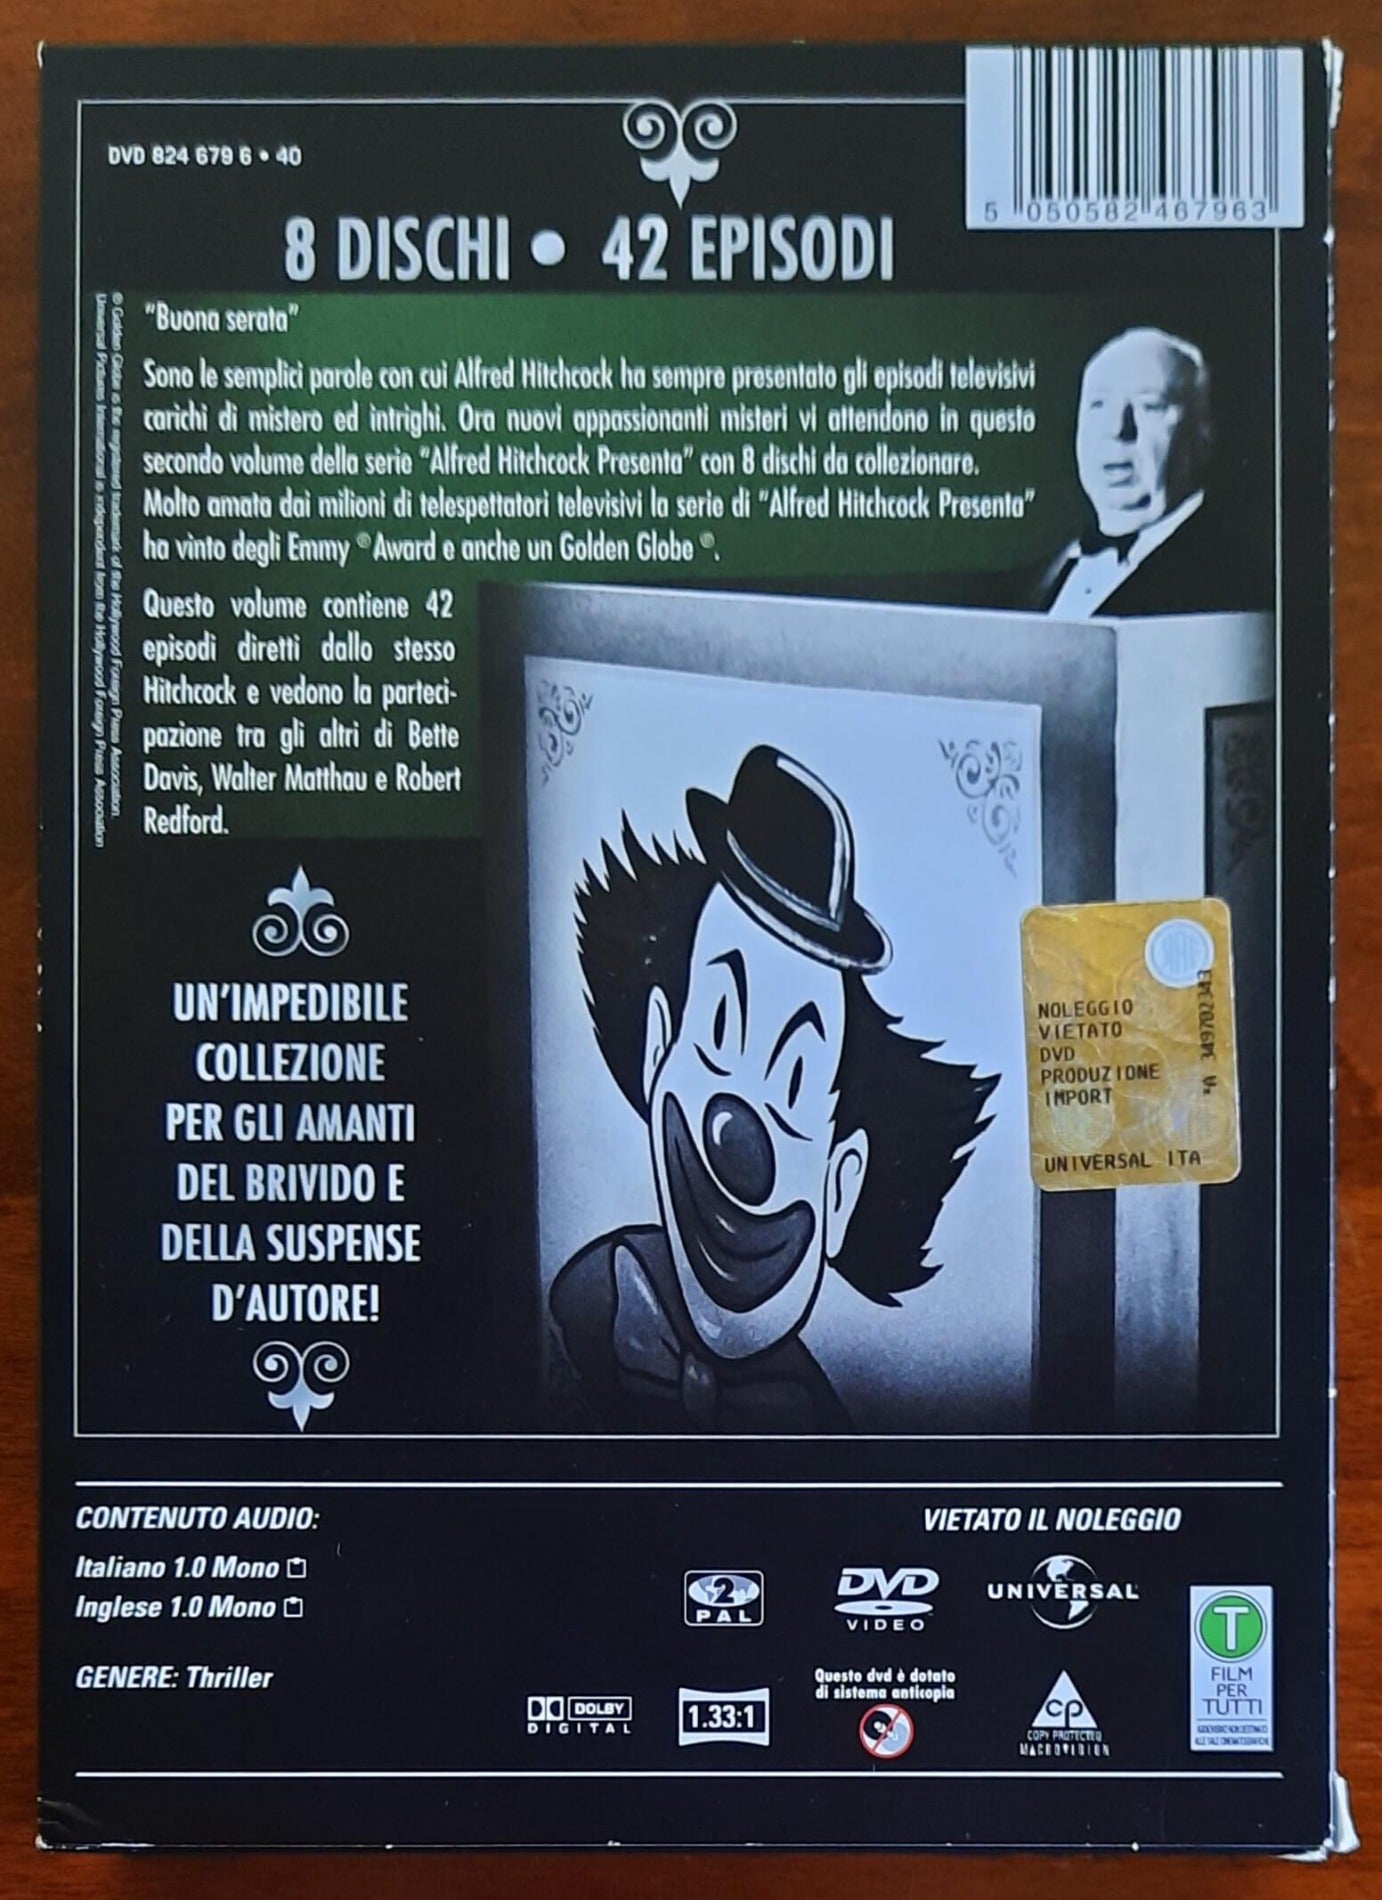 DVD: Alfred Hitchcock presenta Volume 2